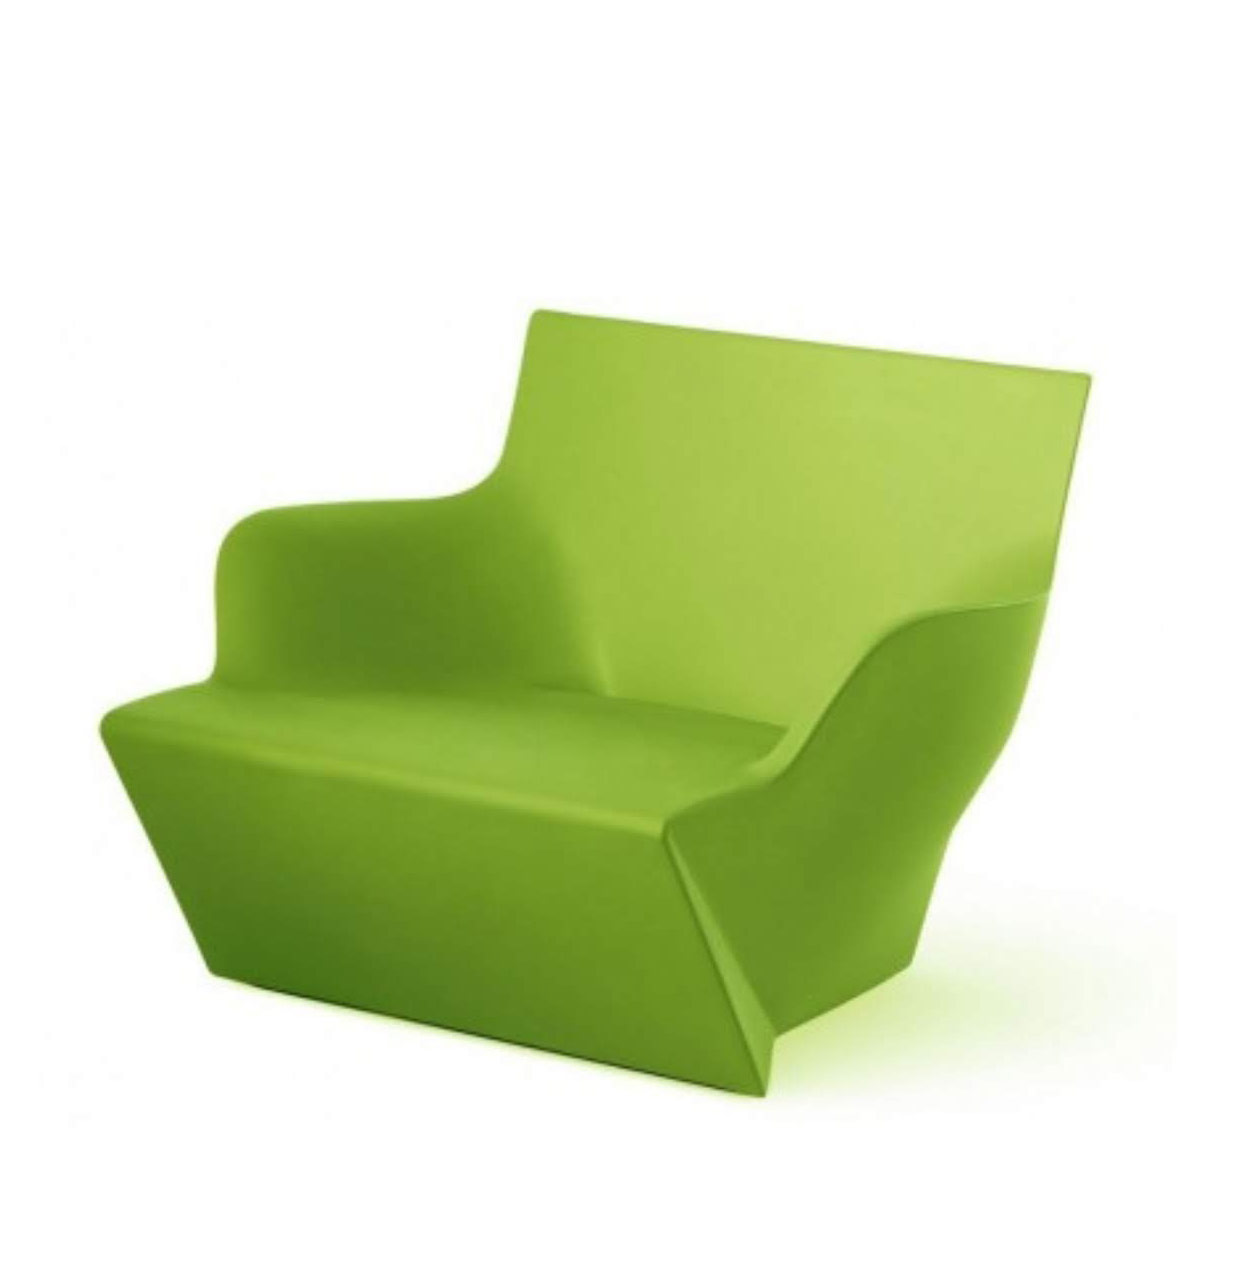 Green fresh armchair